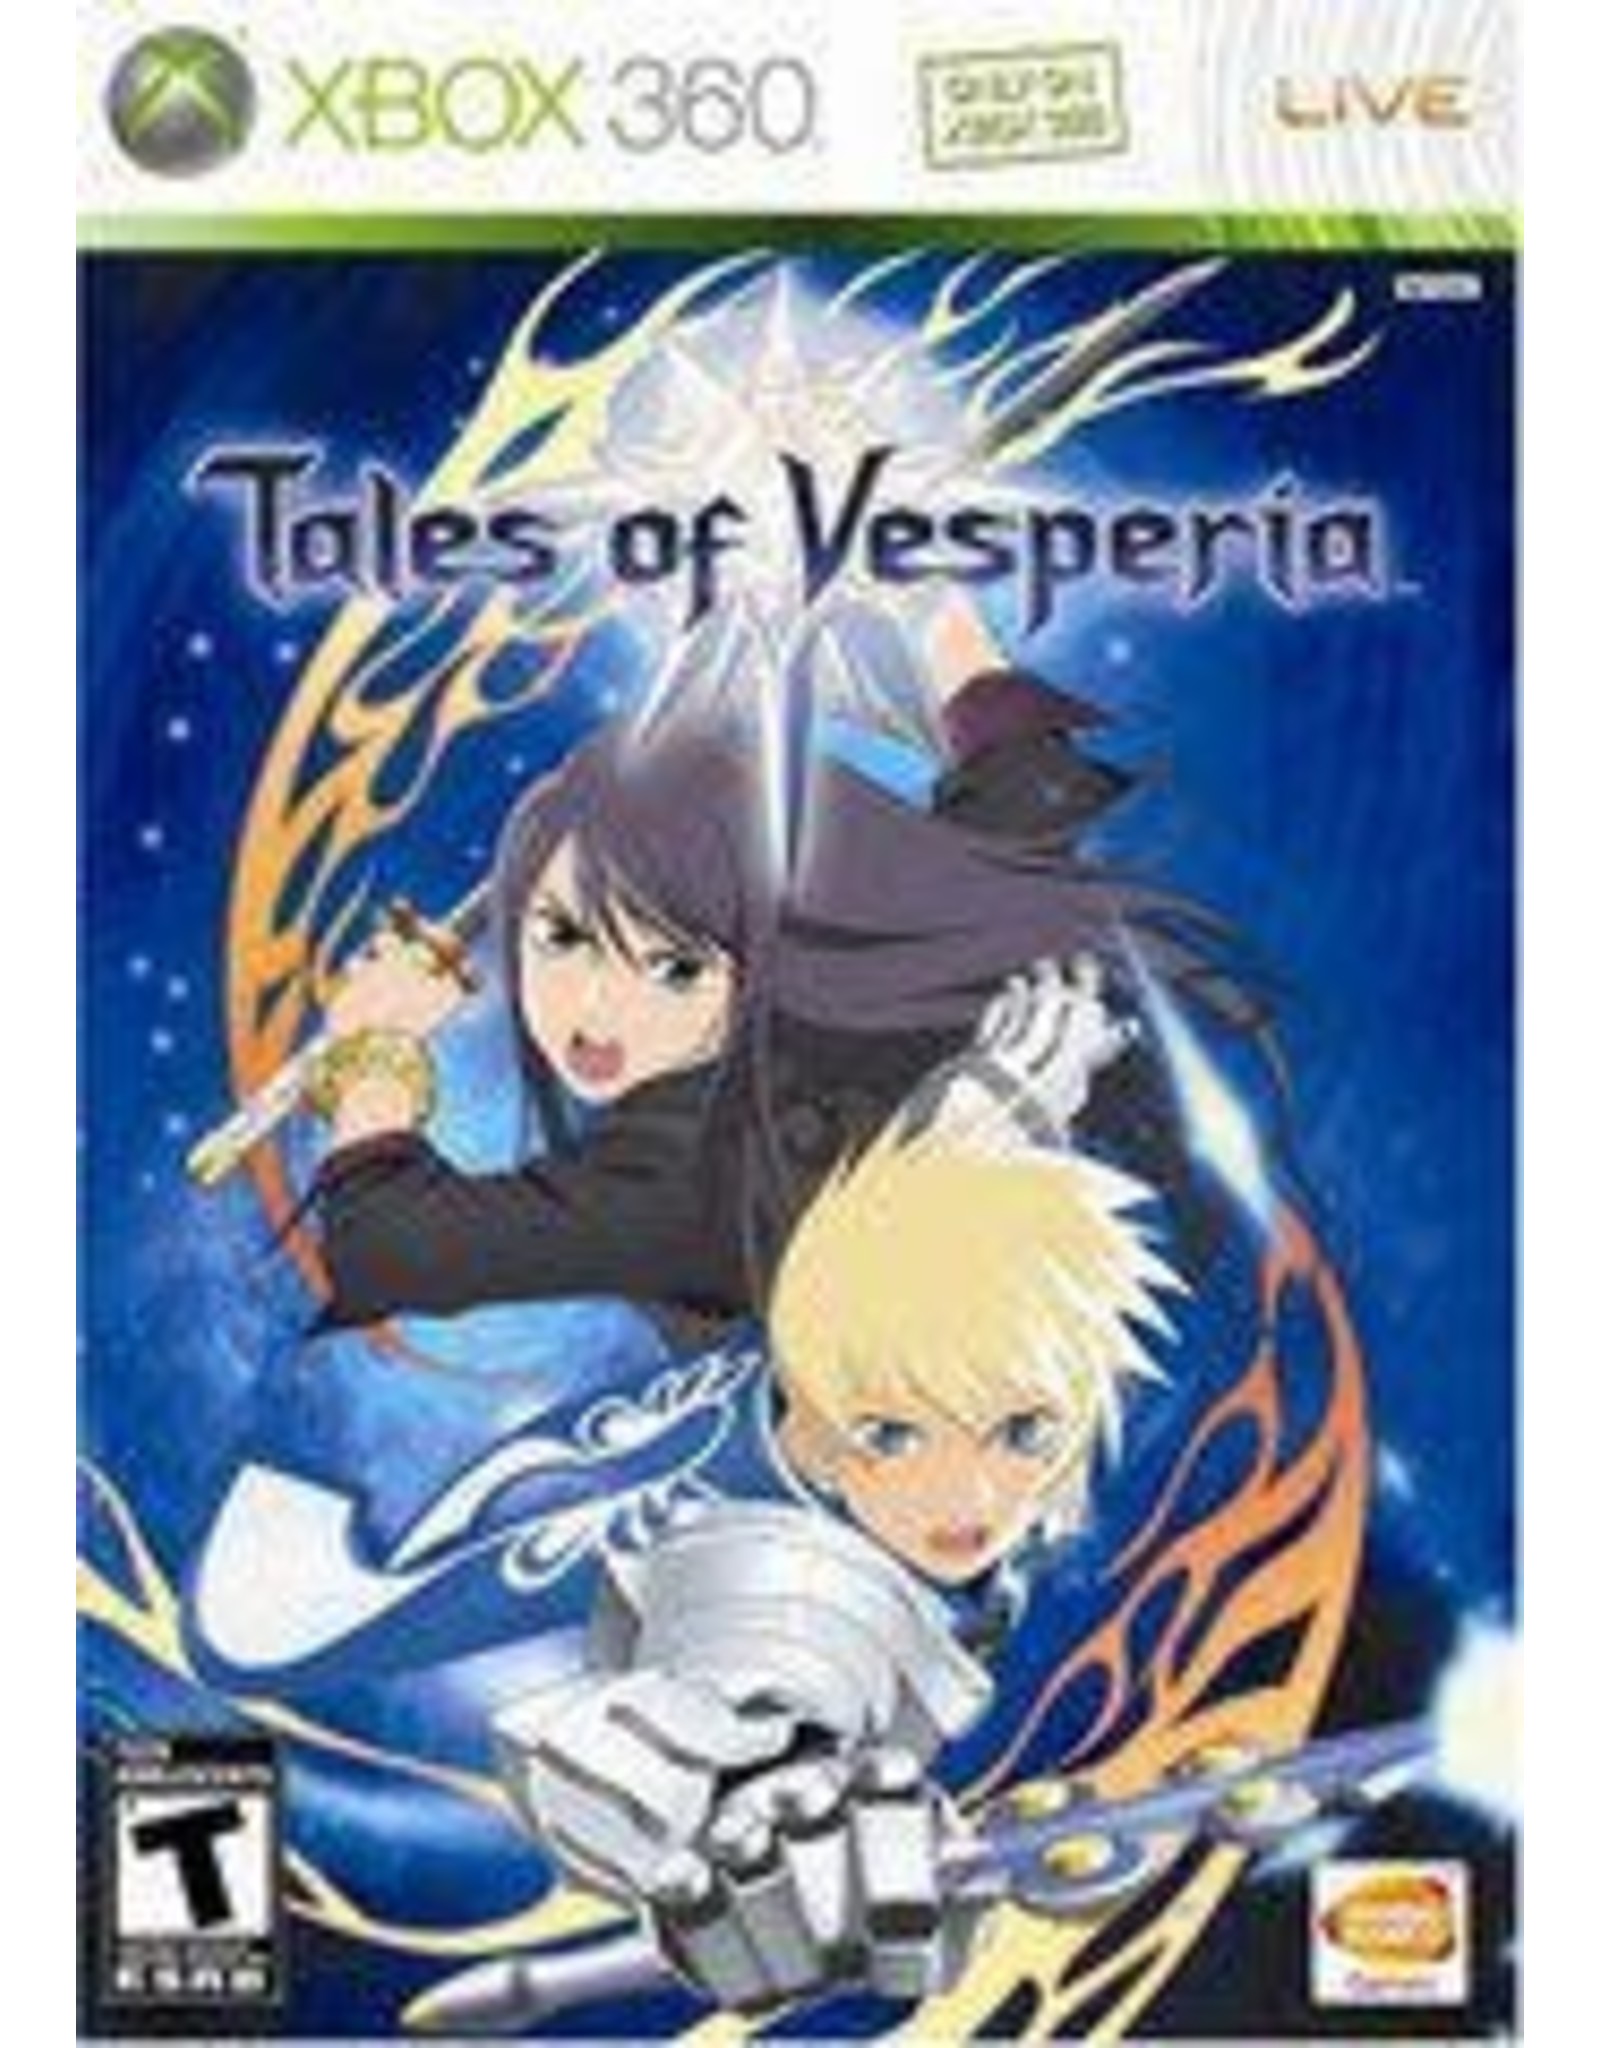 Xbox 360 Tales of Vesperia (Used)